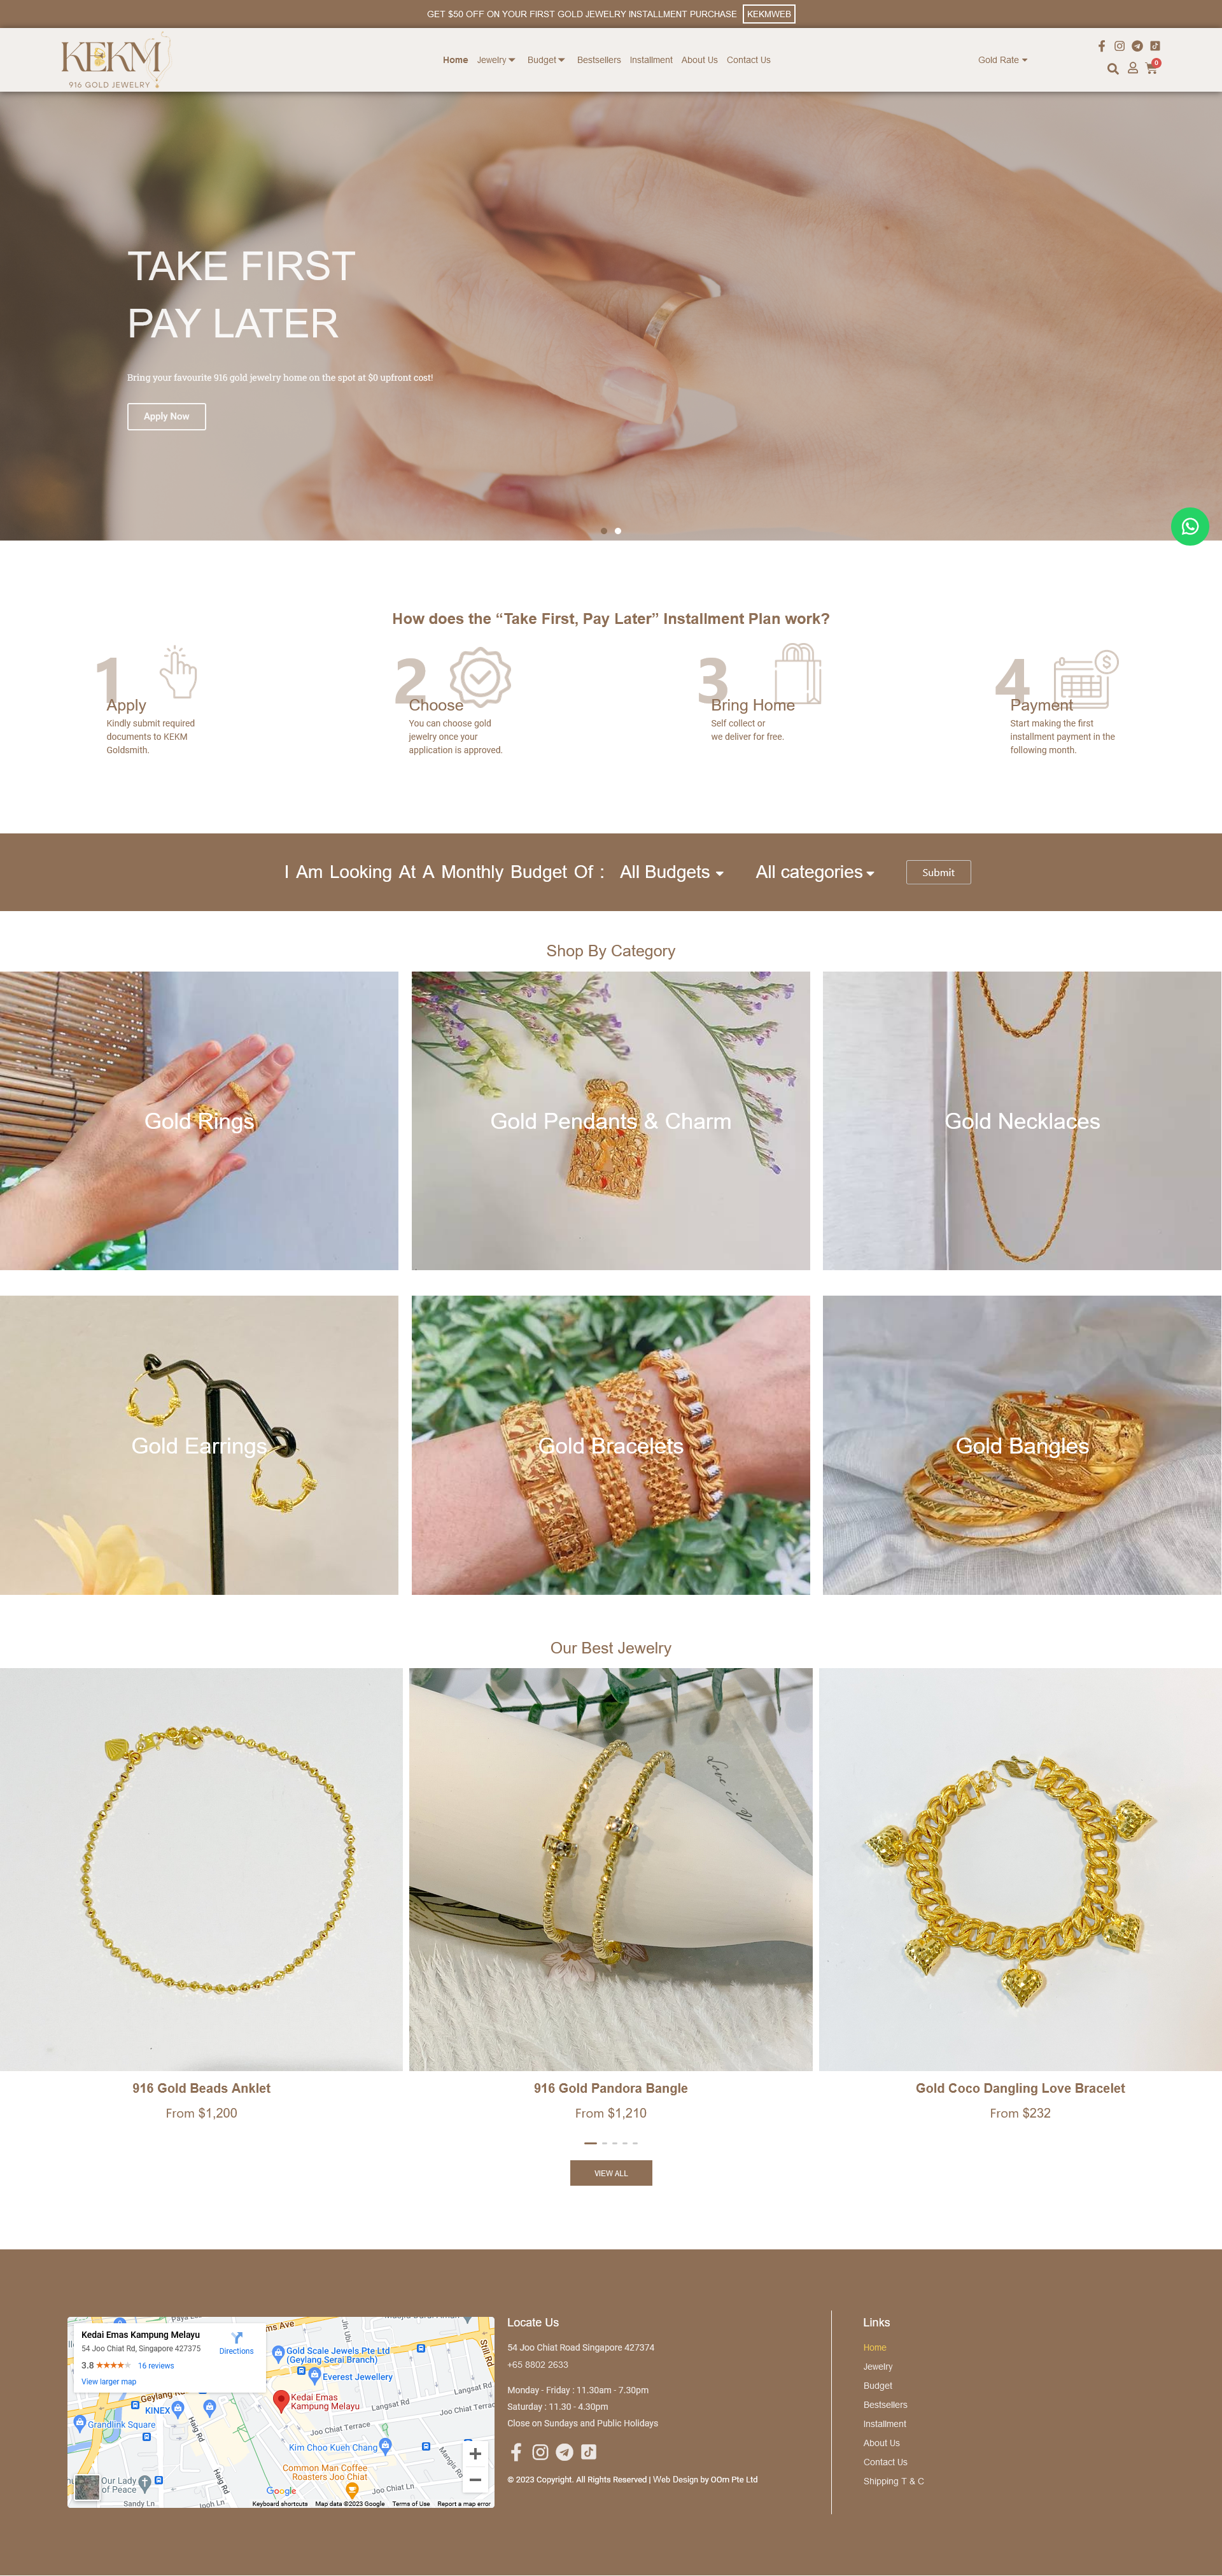 KEKM 916 Gold Jewelry